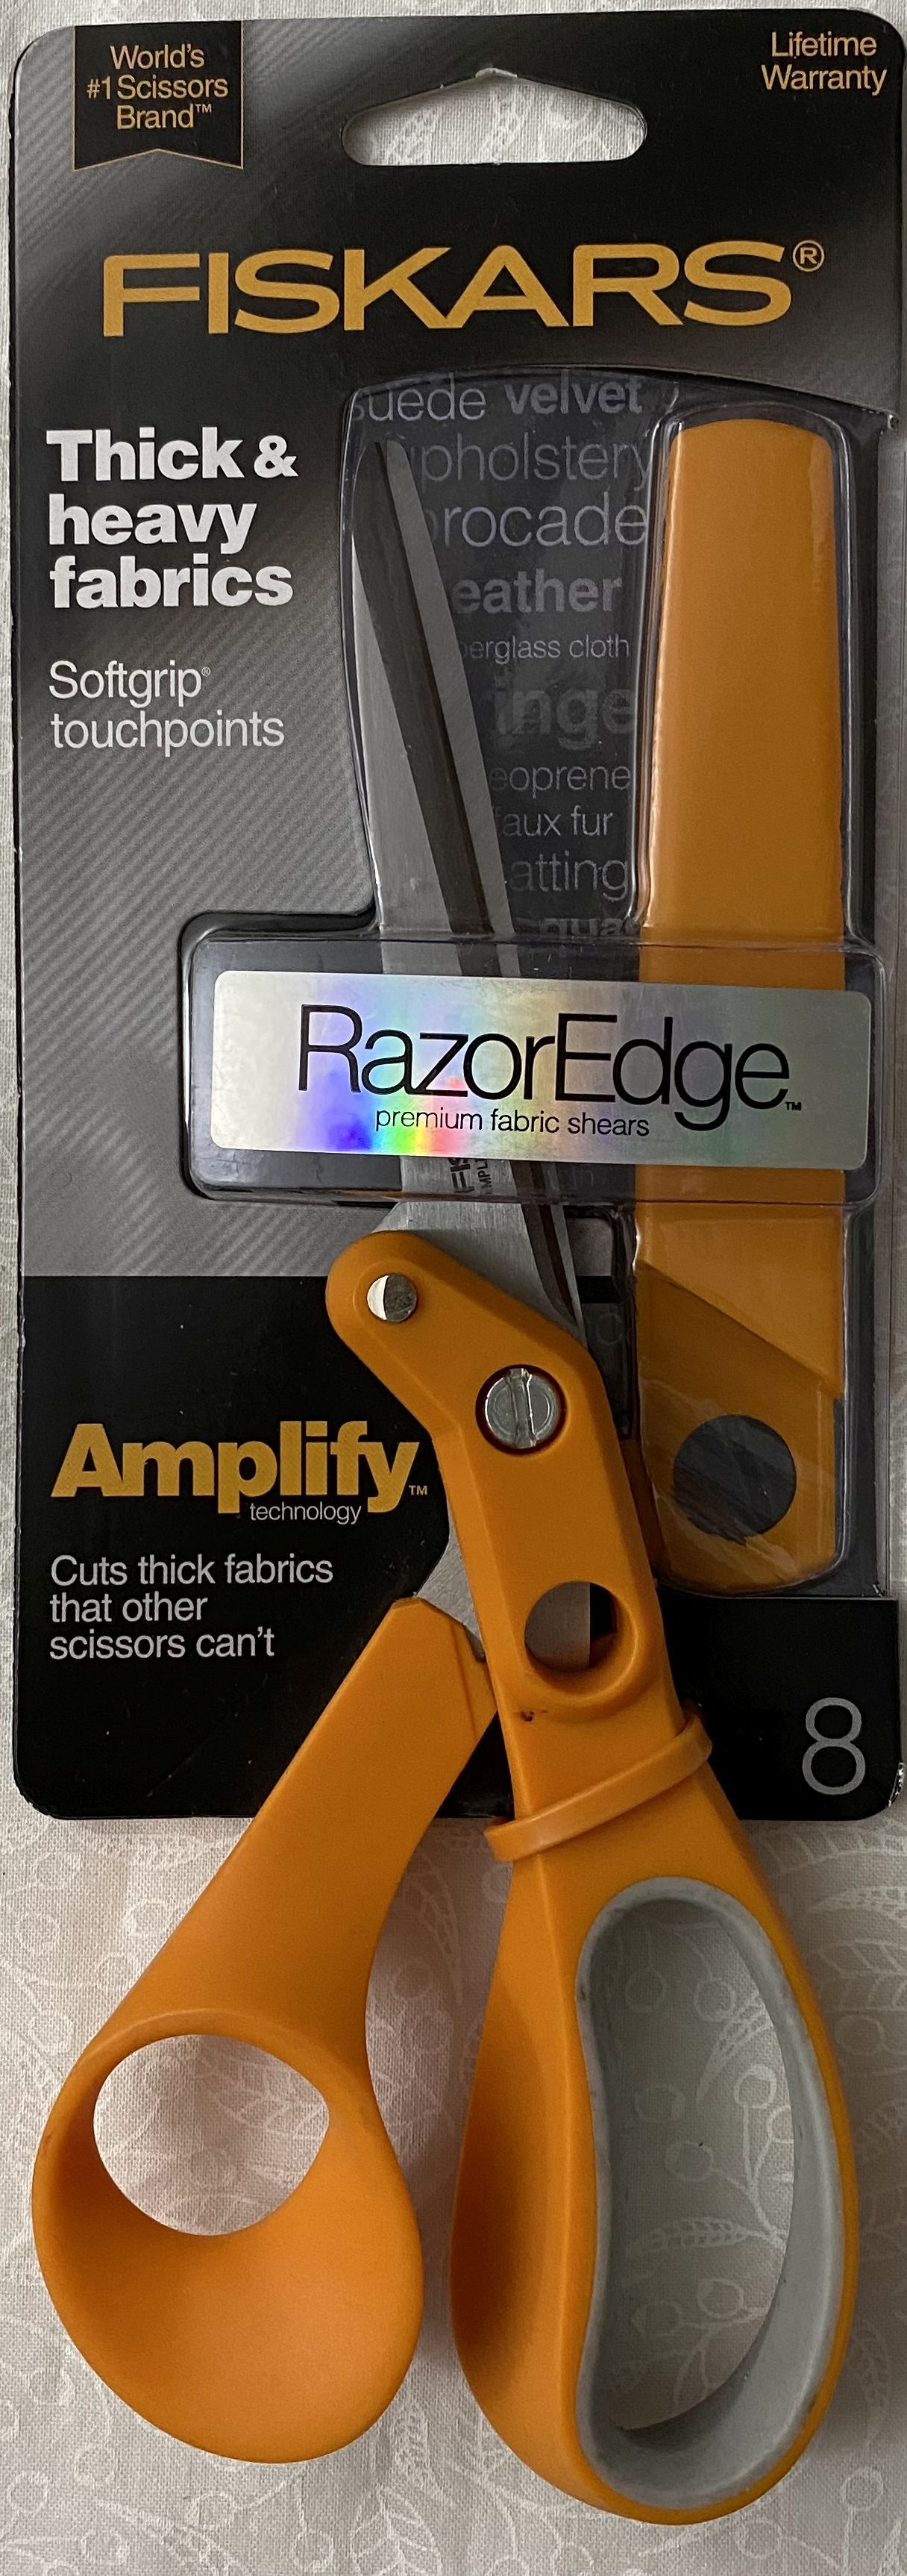 Fiskars 8 Amplify RazorEdge Fabric Shears